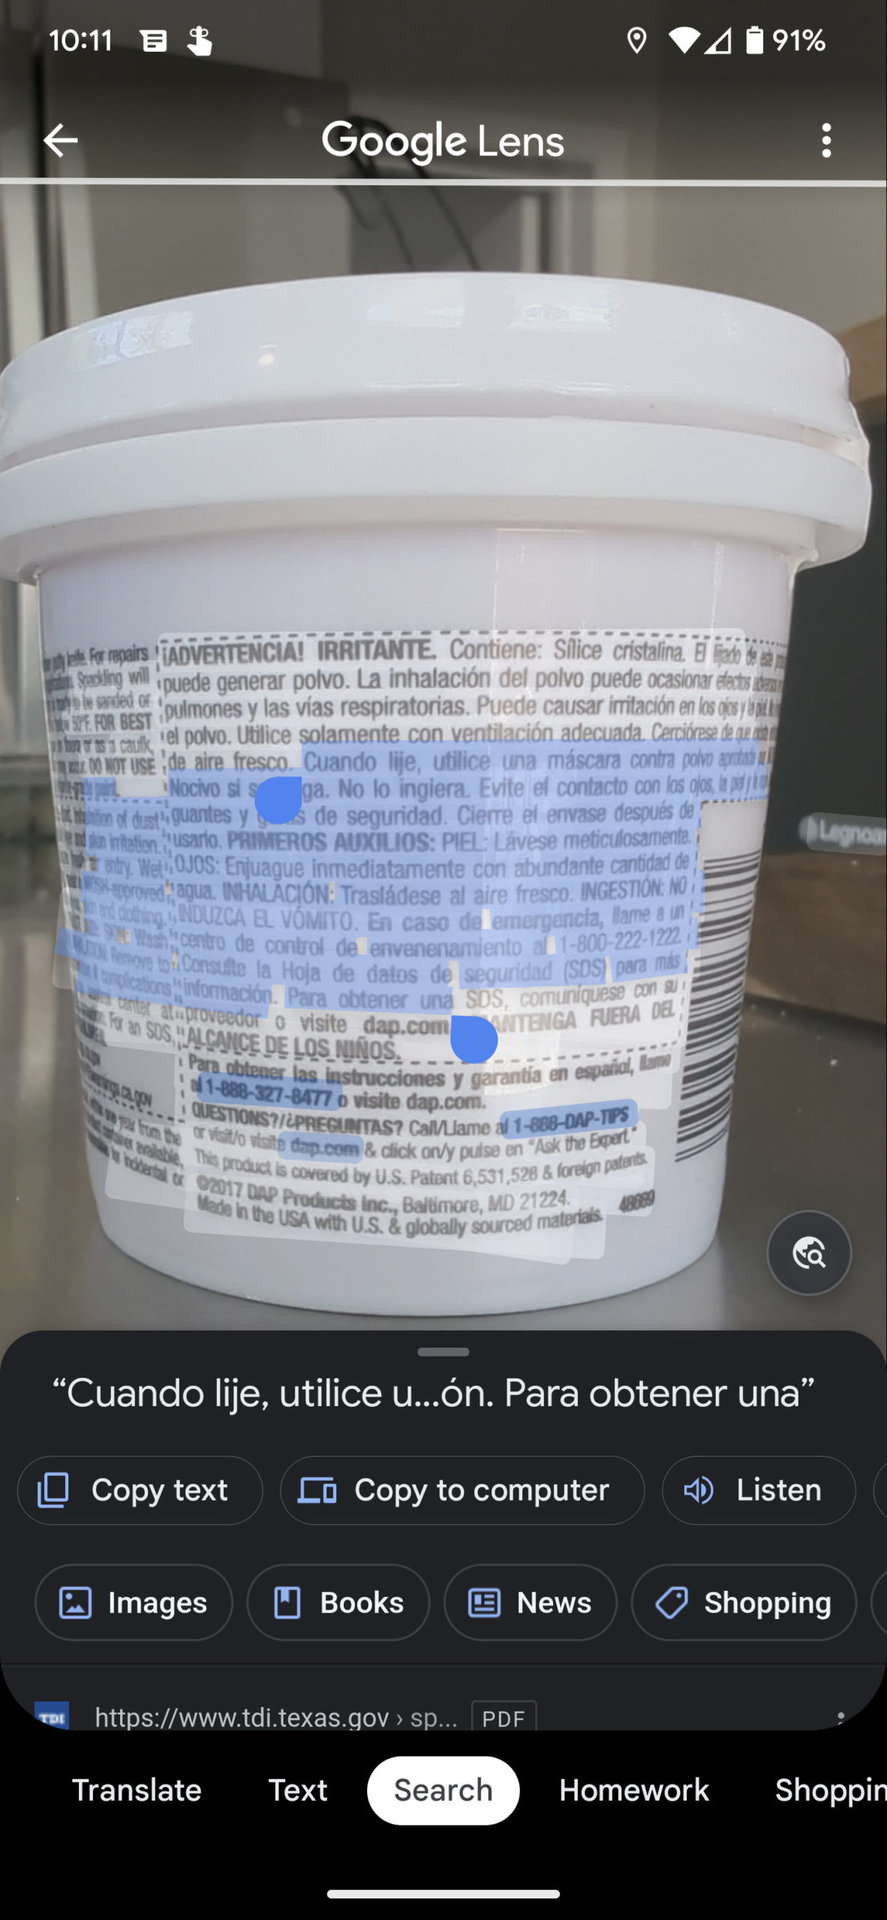 Live Translating Spanish text in Google Lens